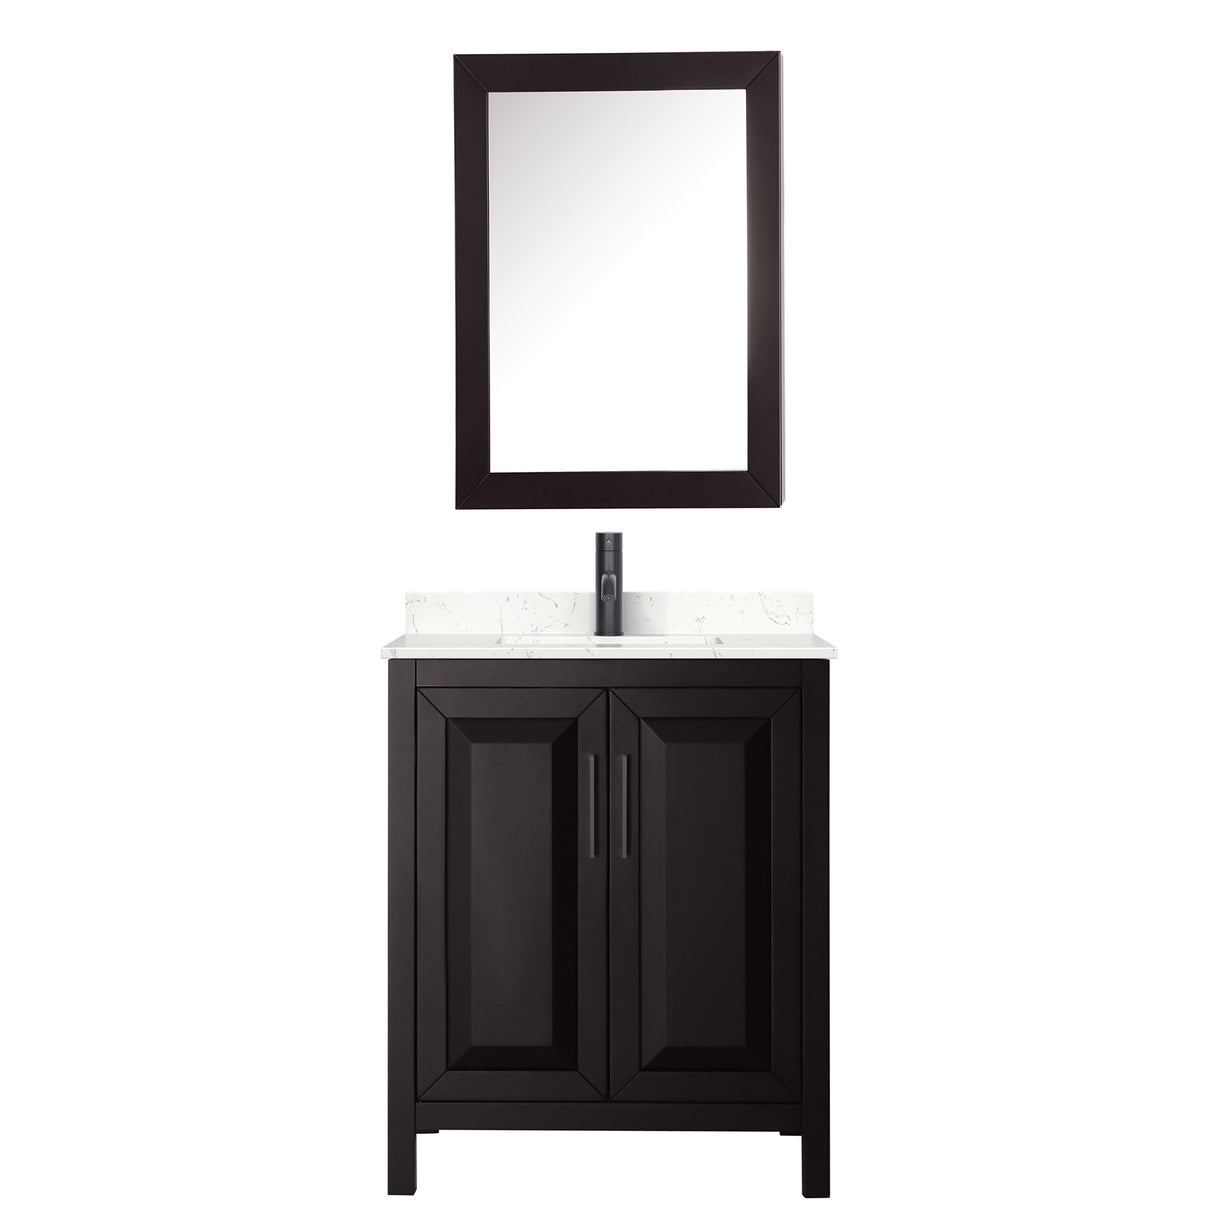 Daria 30 Inch Single Bathroom Vanity in Dark Espresso Carrara Cultured Marble Countertop Undermount Square Sink Matte Black Trim Medicine Cabinet